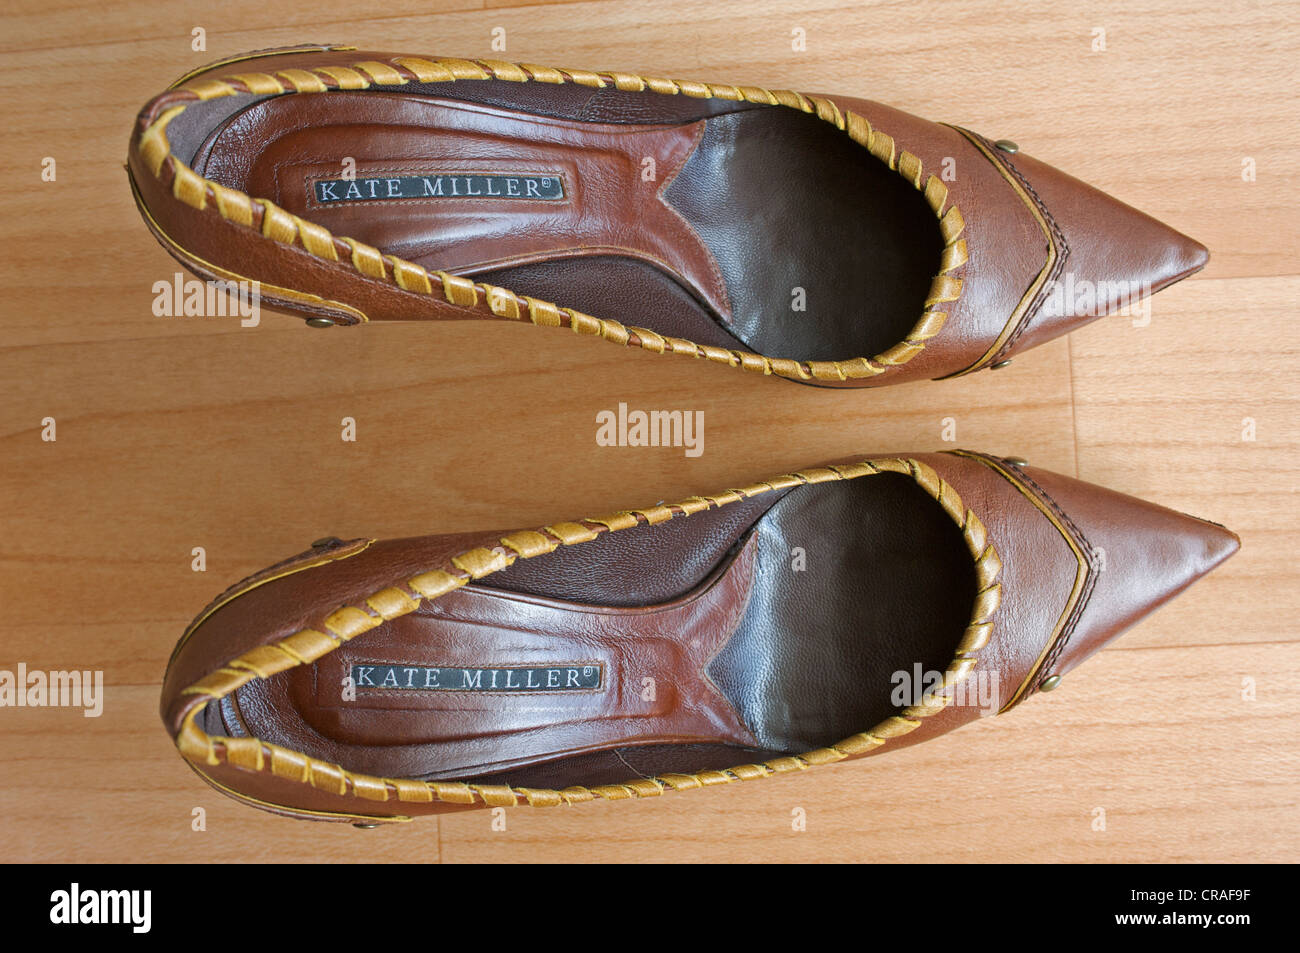 Kate Miller Italian women's shoes Stock Photo - Alamy